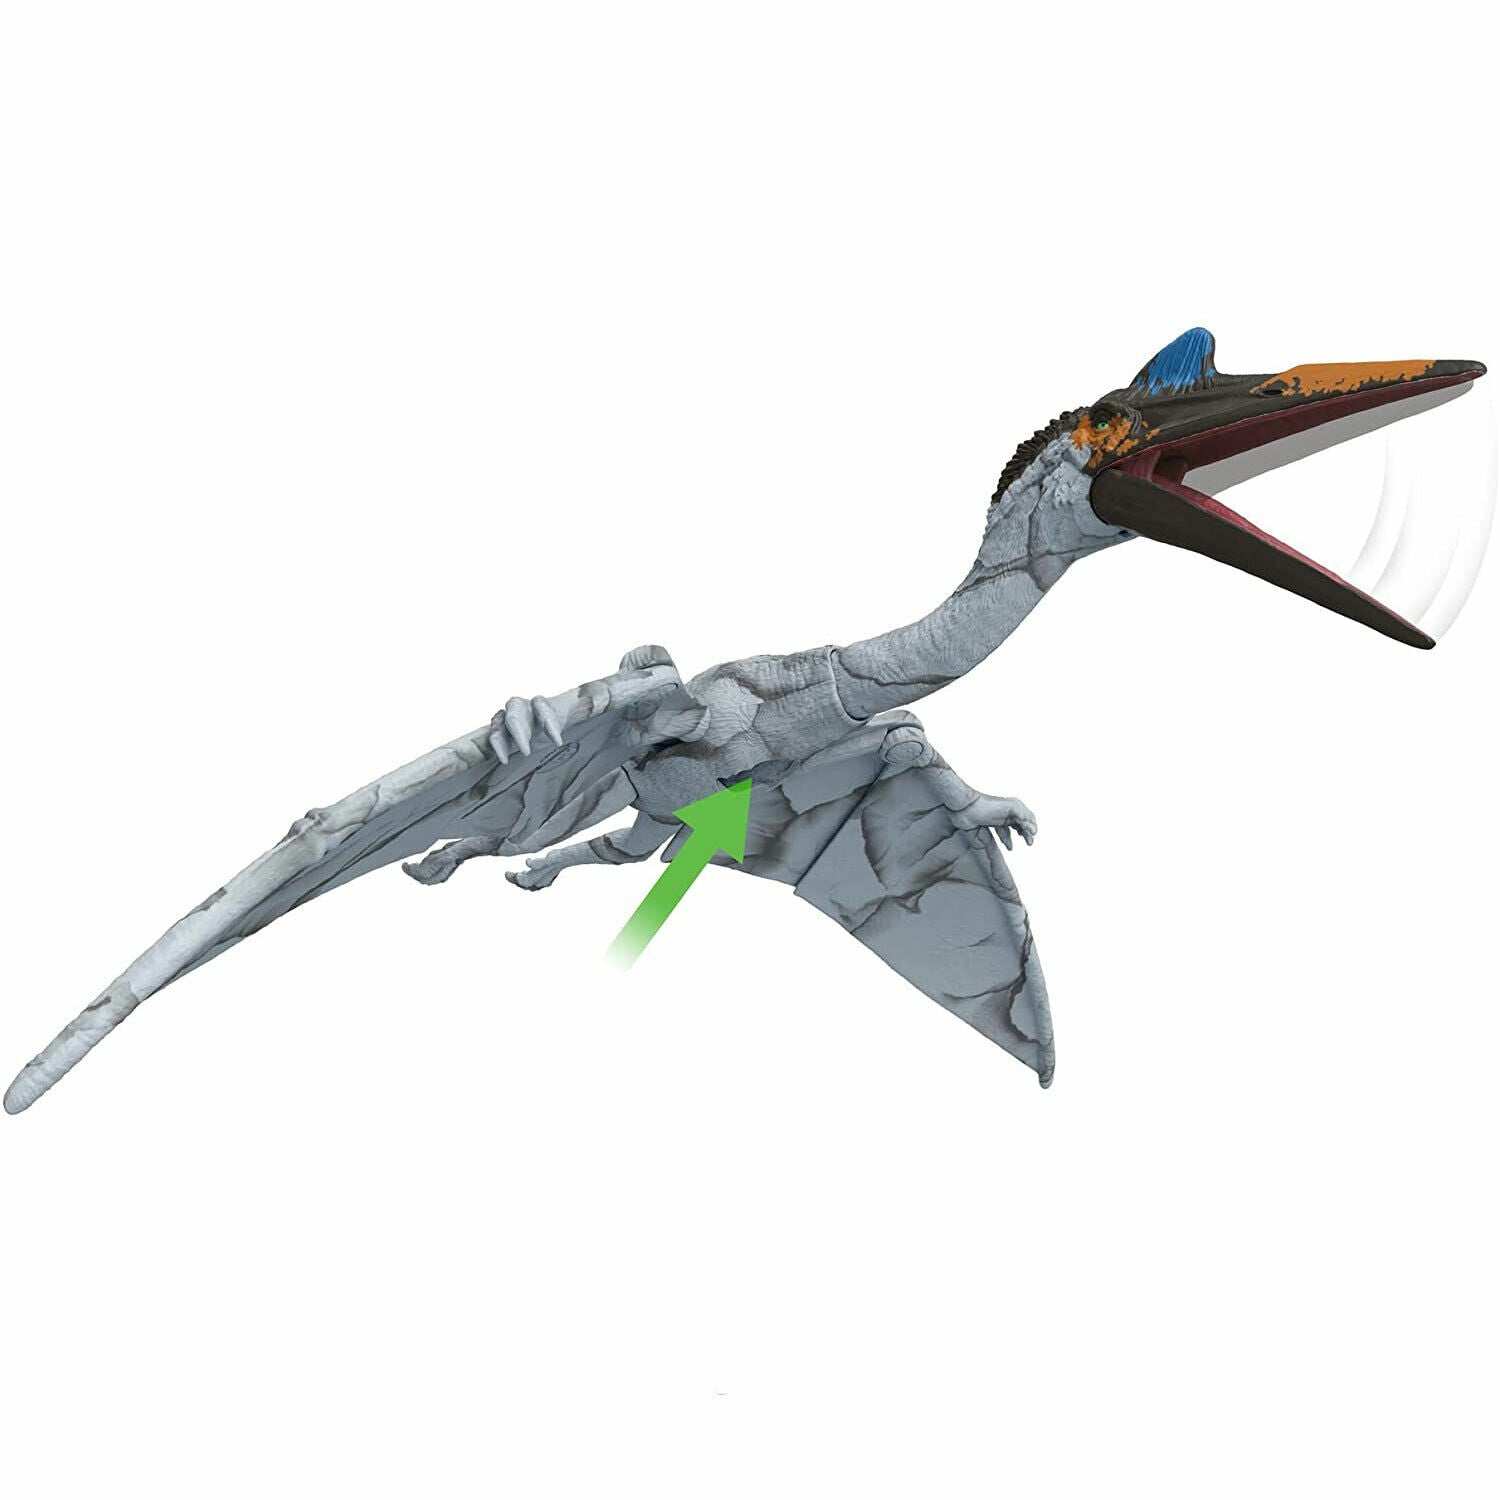 New Jurassic World Dominion Quetzalcoatlus Dinosaur Figure - Massive Action Toy